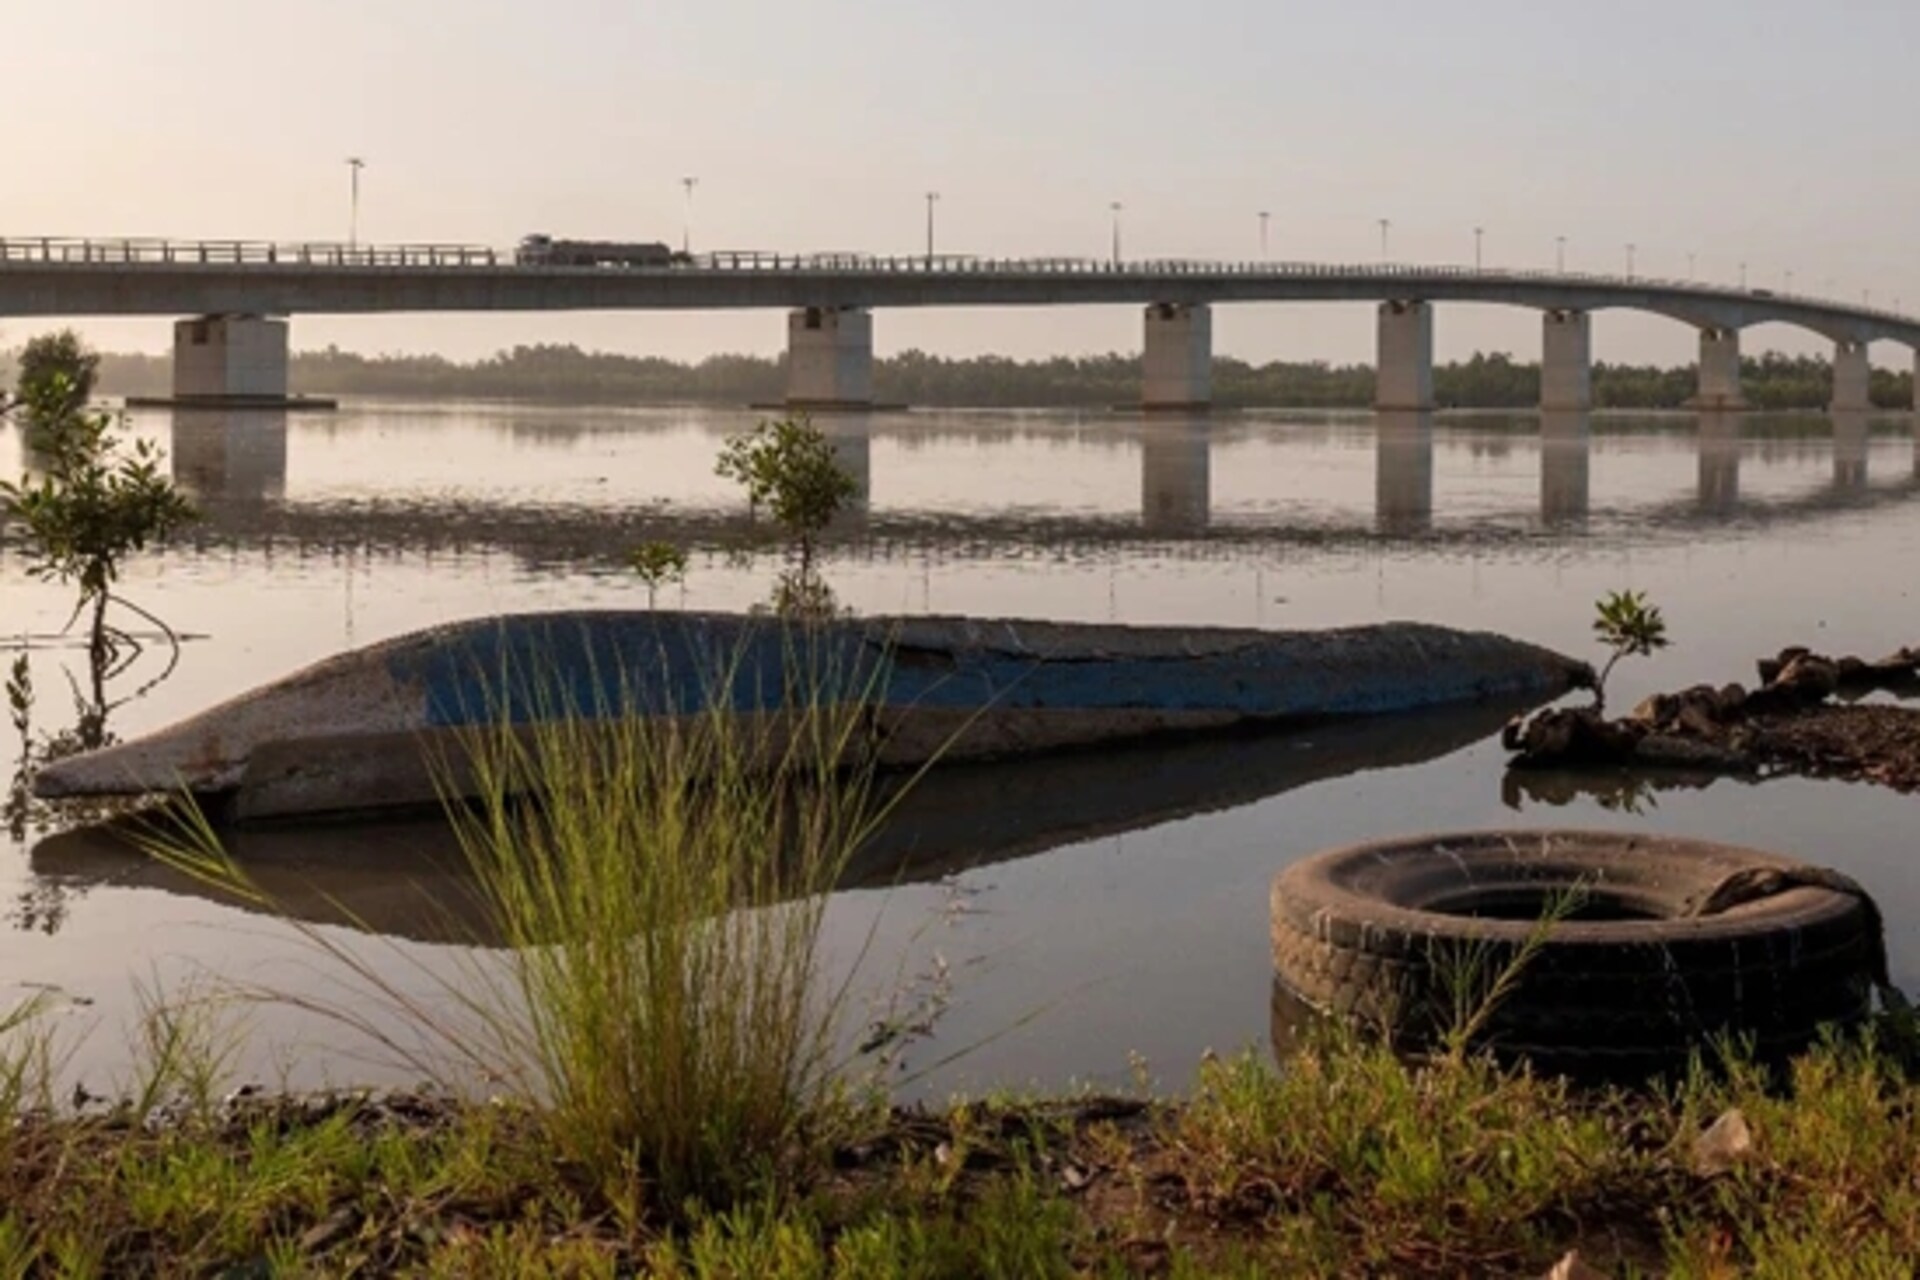 Christian Frutiger: The Gambia River